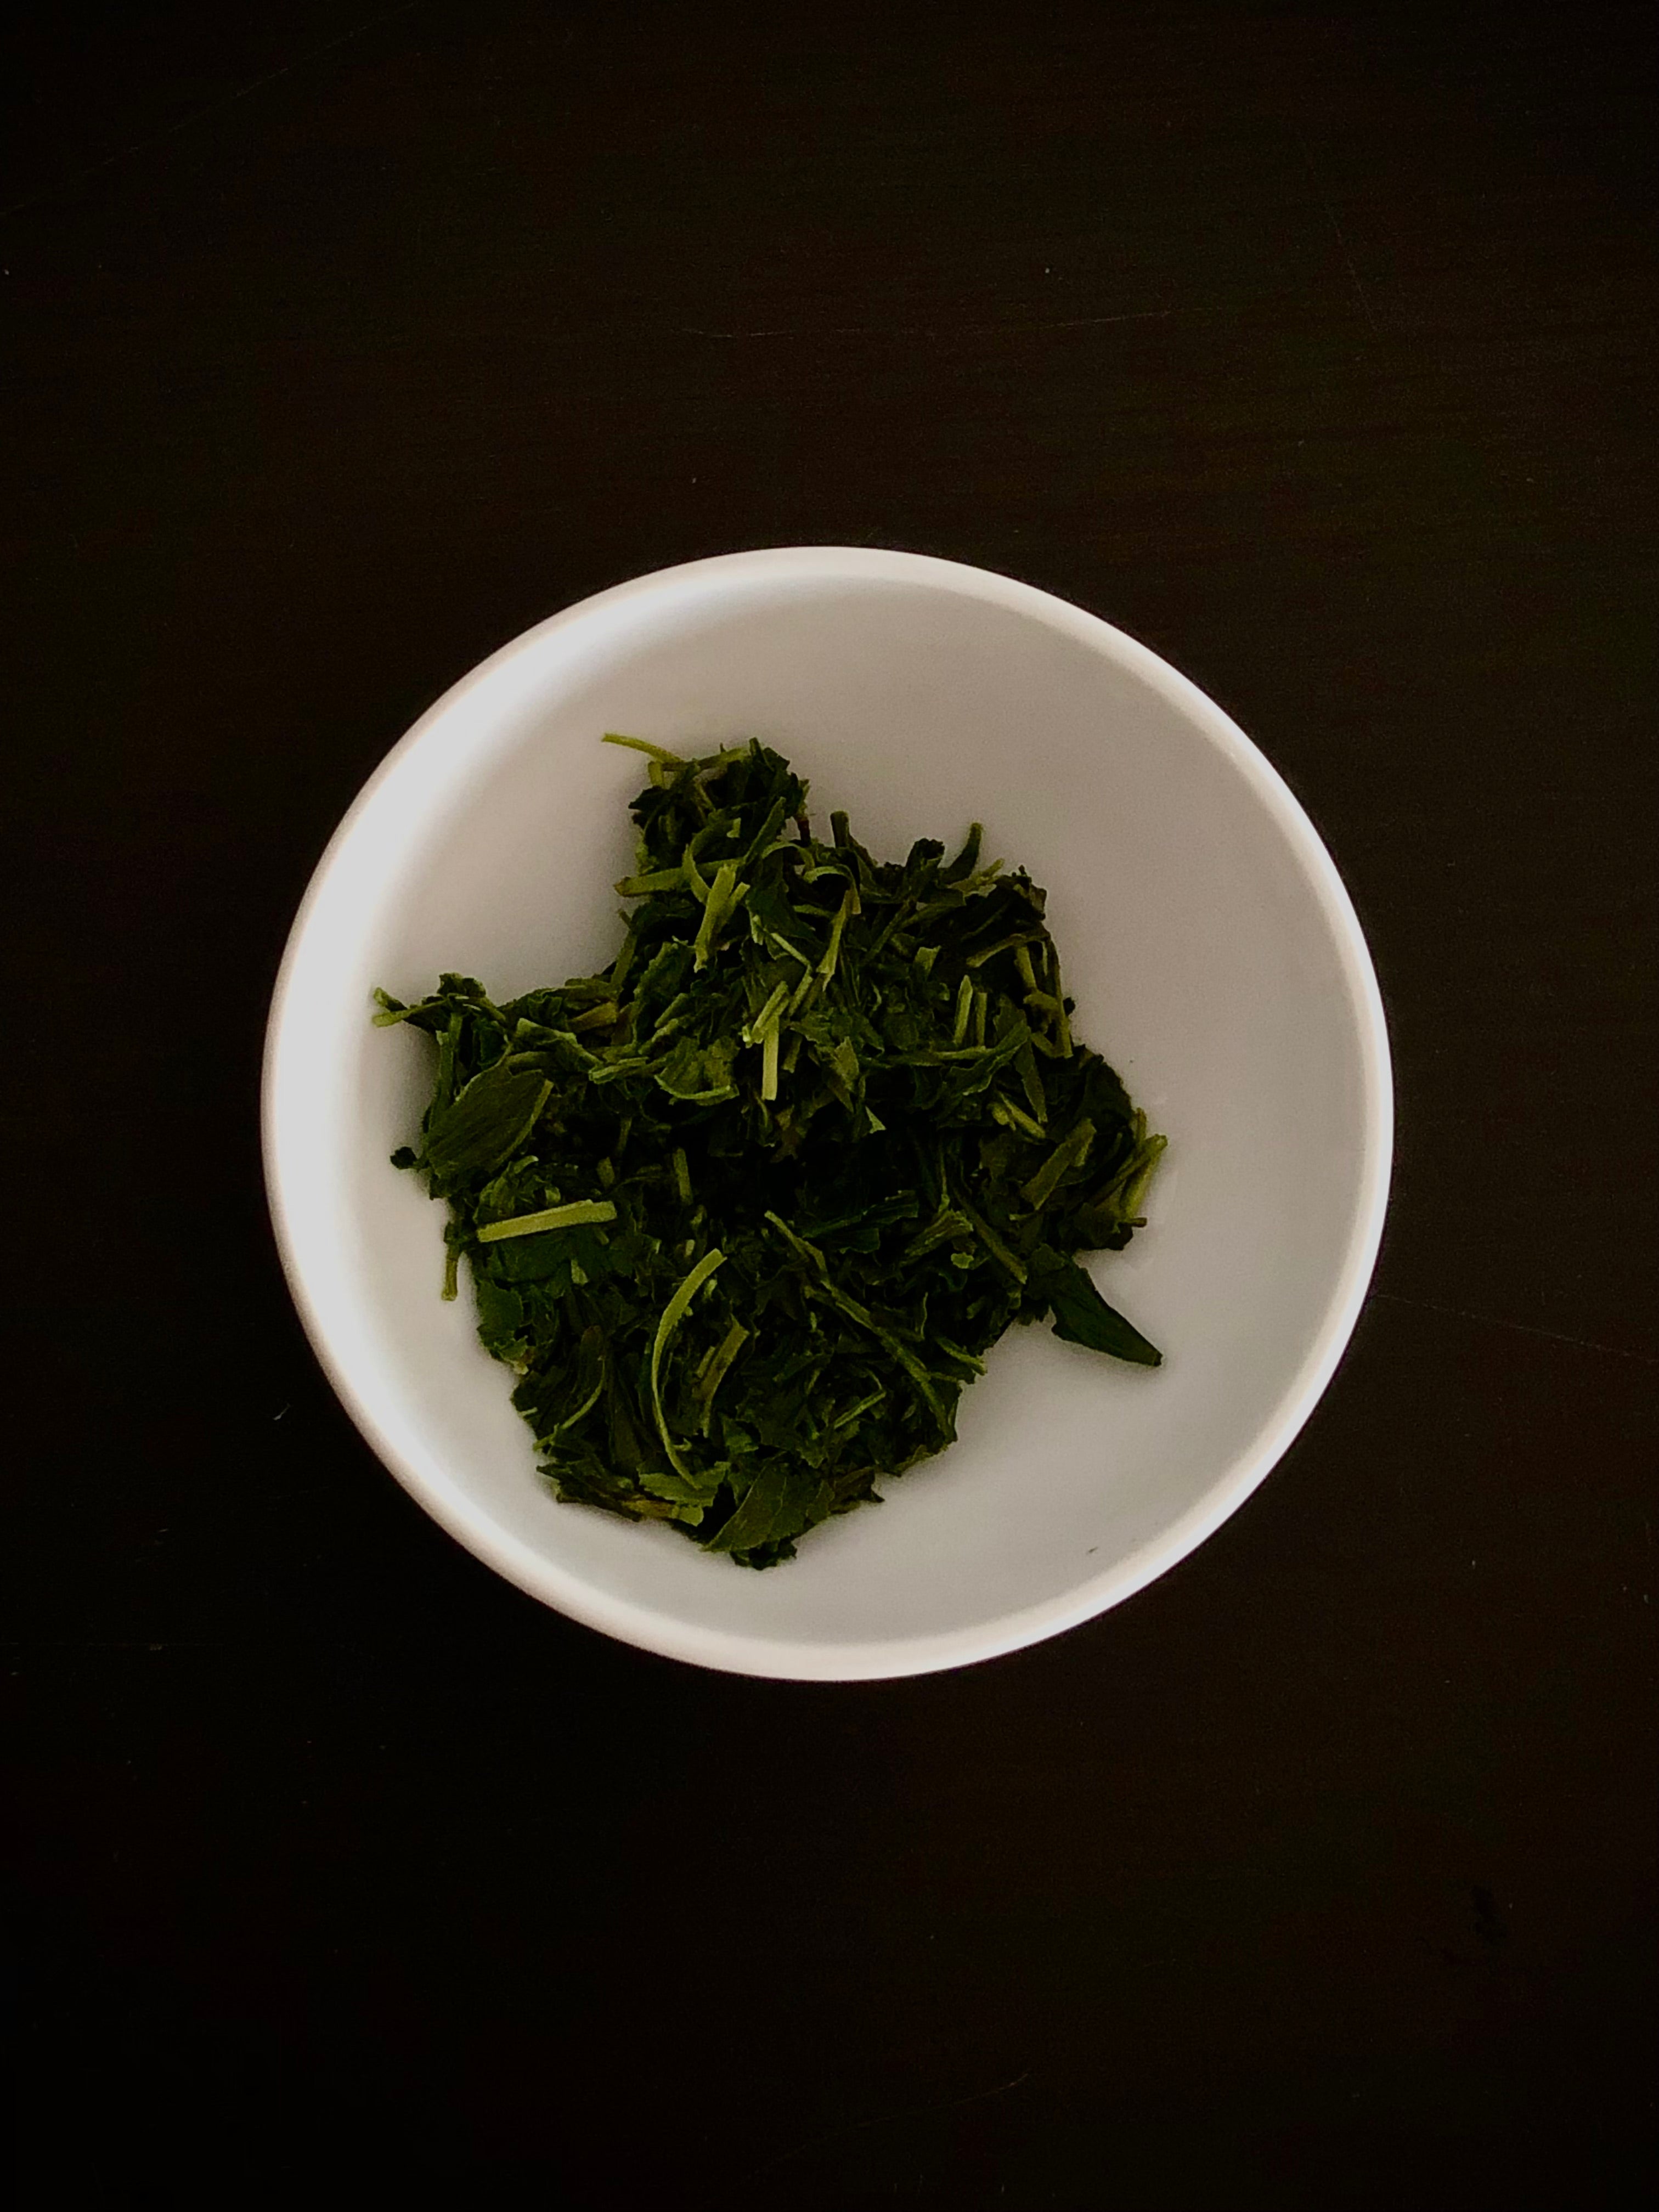 Shiraore karigane green tea loose leaf side view from Yame Fukuoka sold by Sabo Tea Australia – Chiyonoen